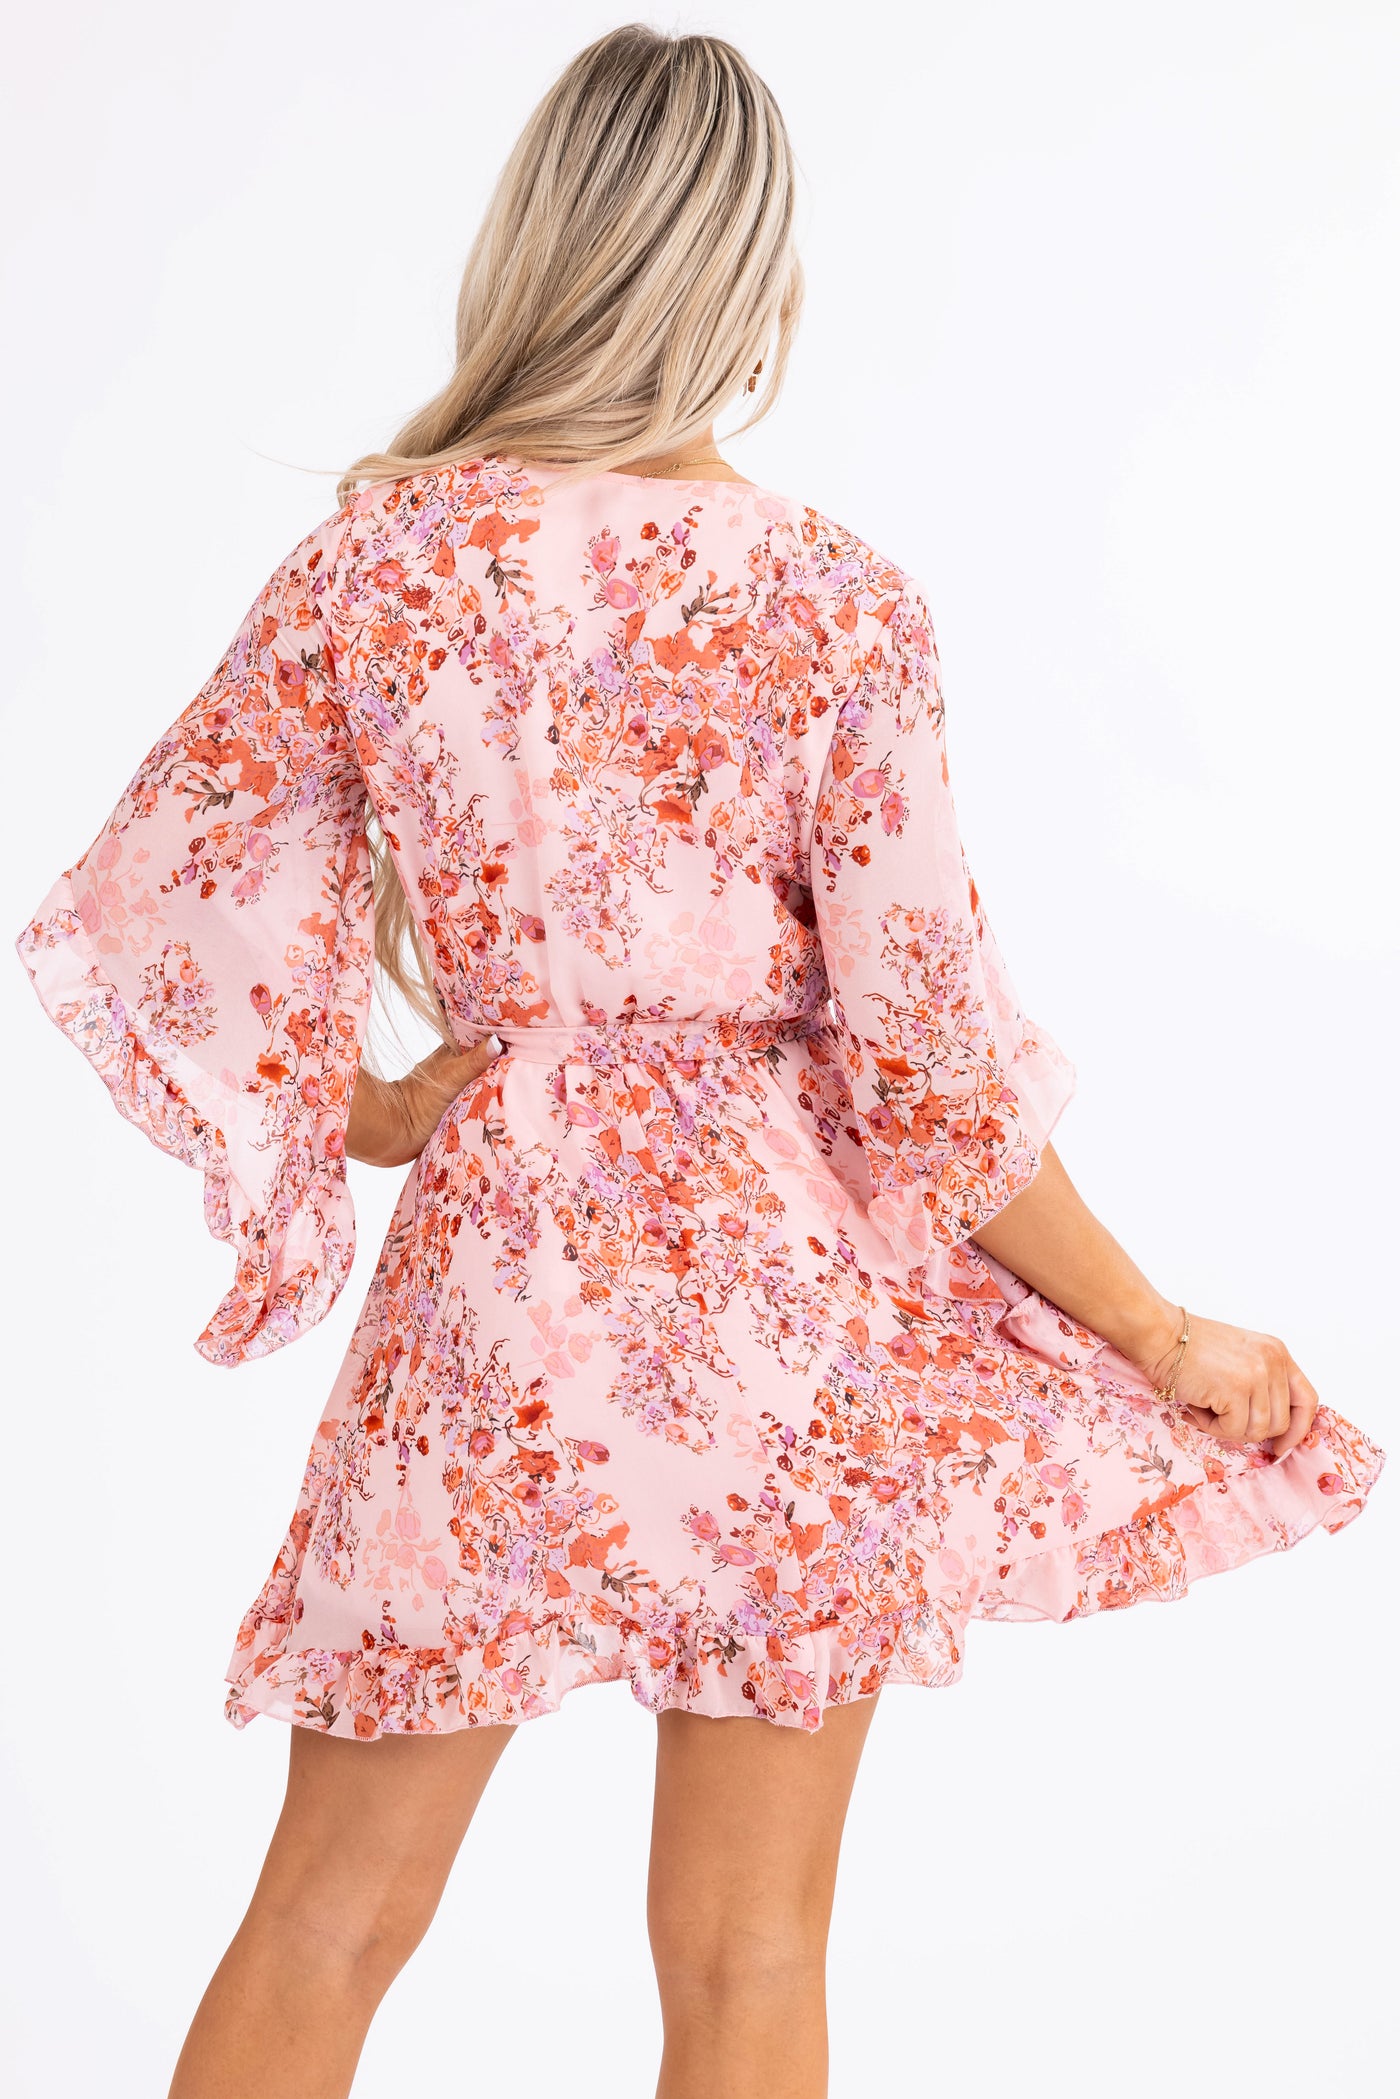 Blush Floral Print Half Sleeve Short Dress